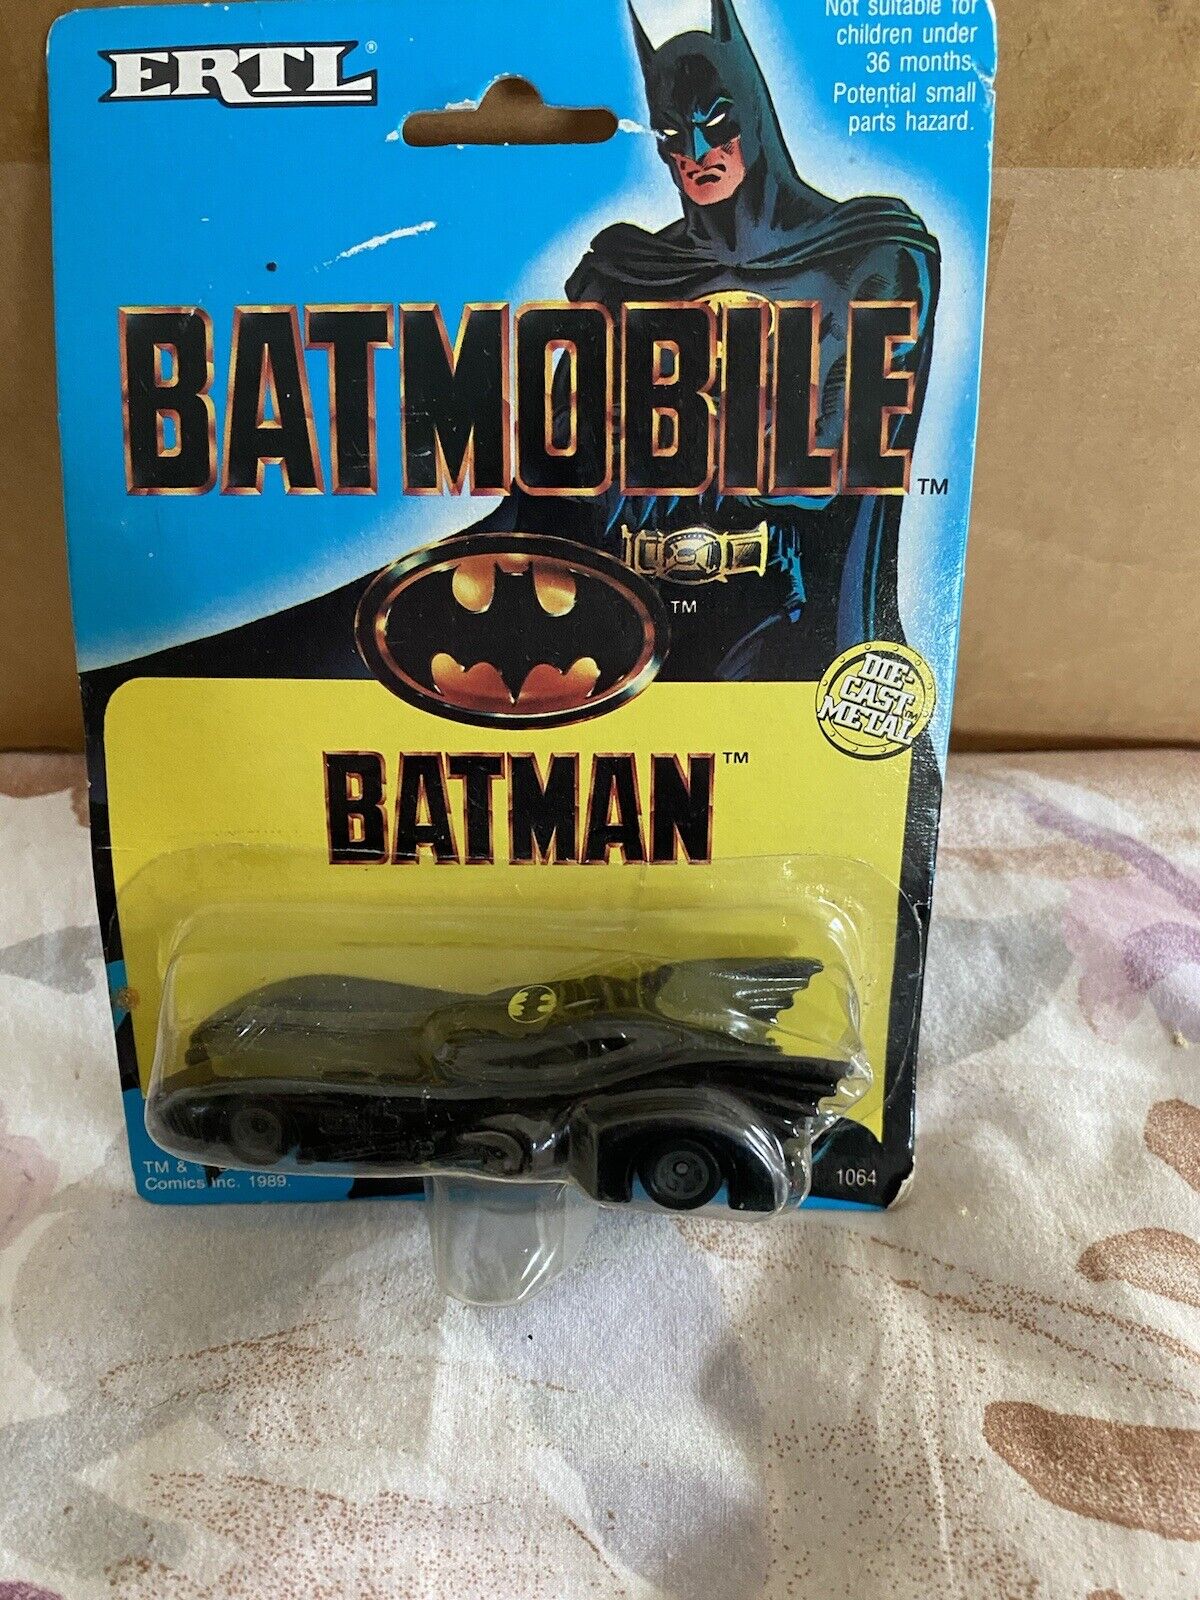 ERTL matchbox Batman